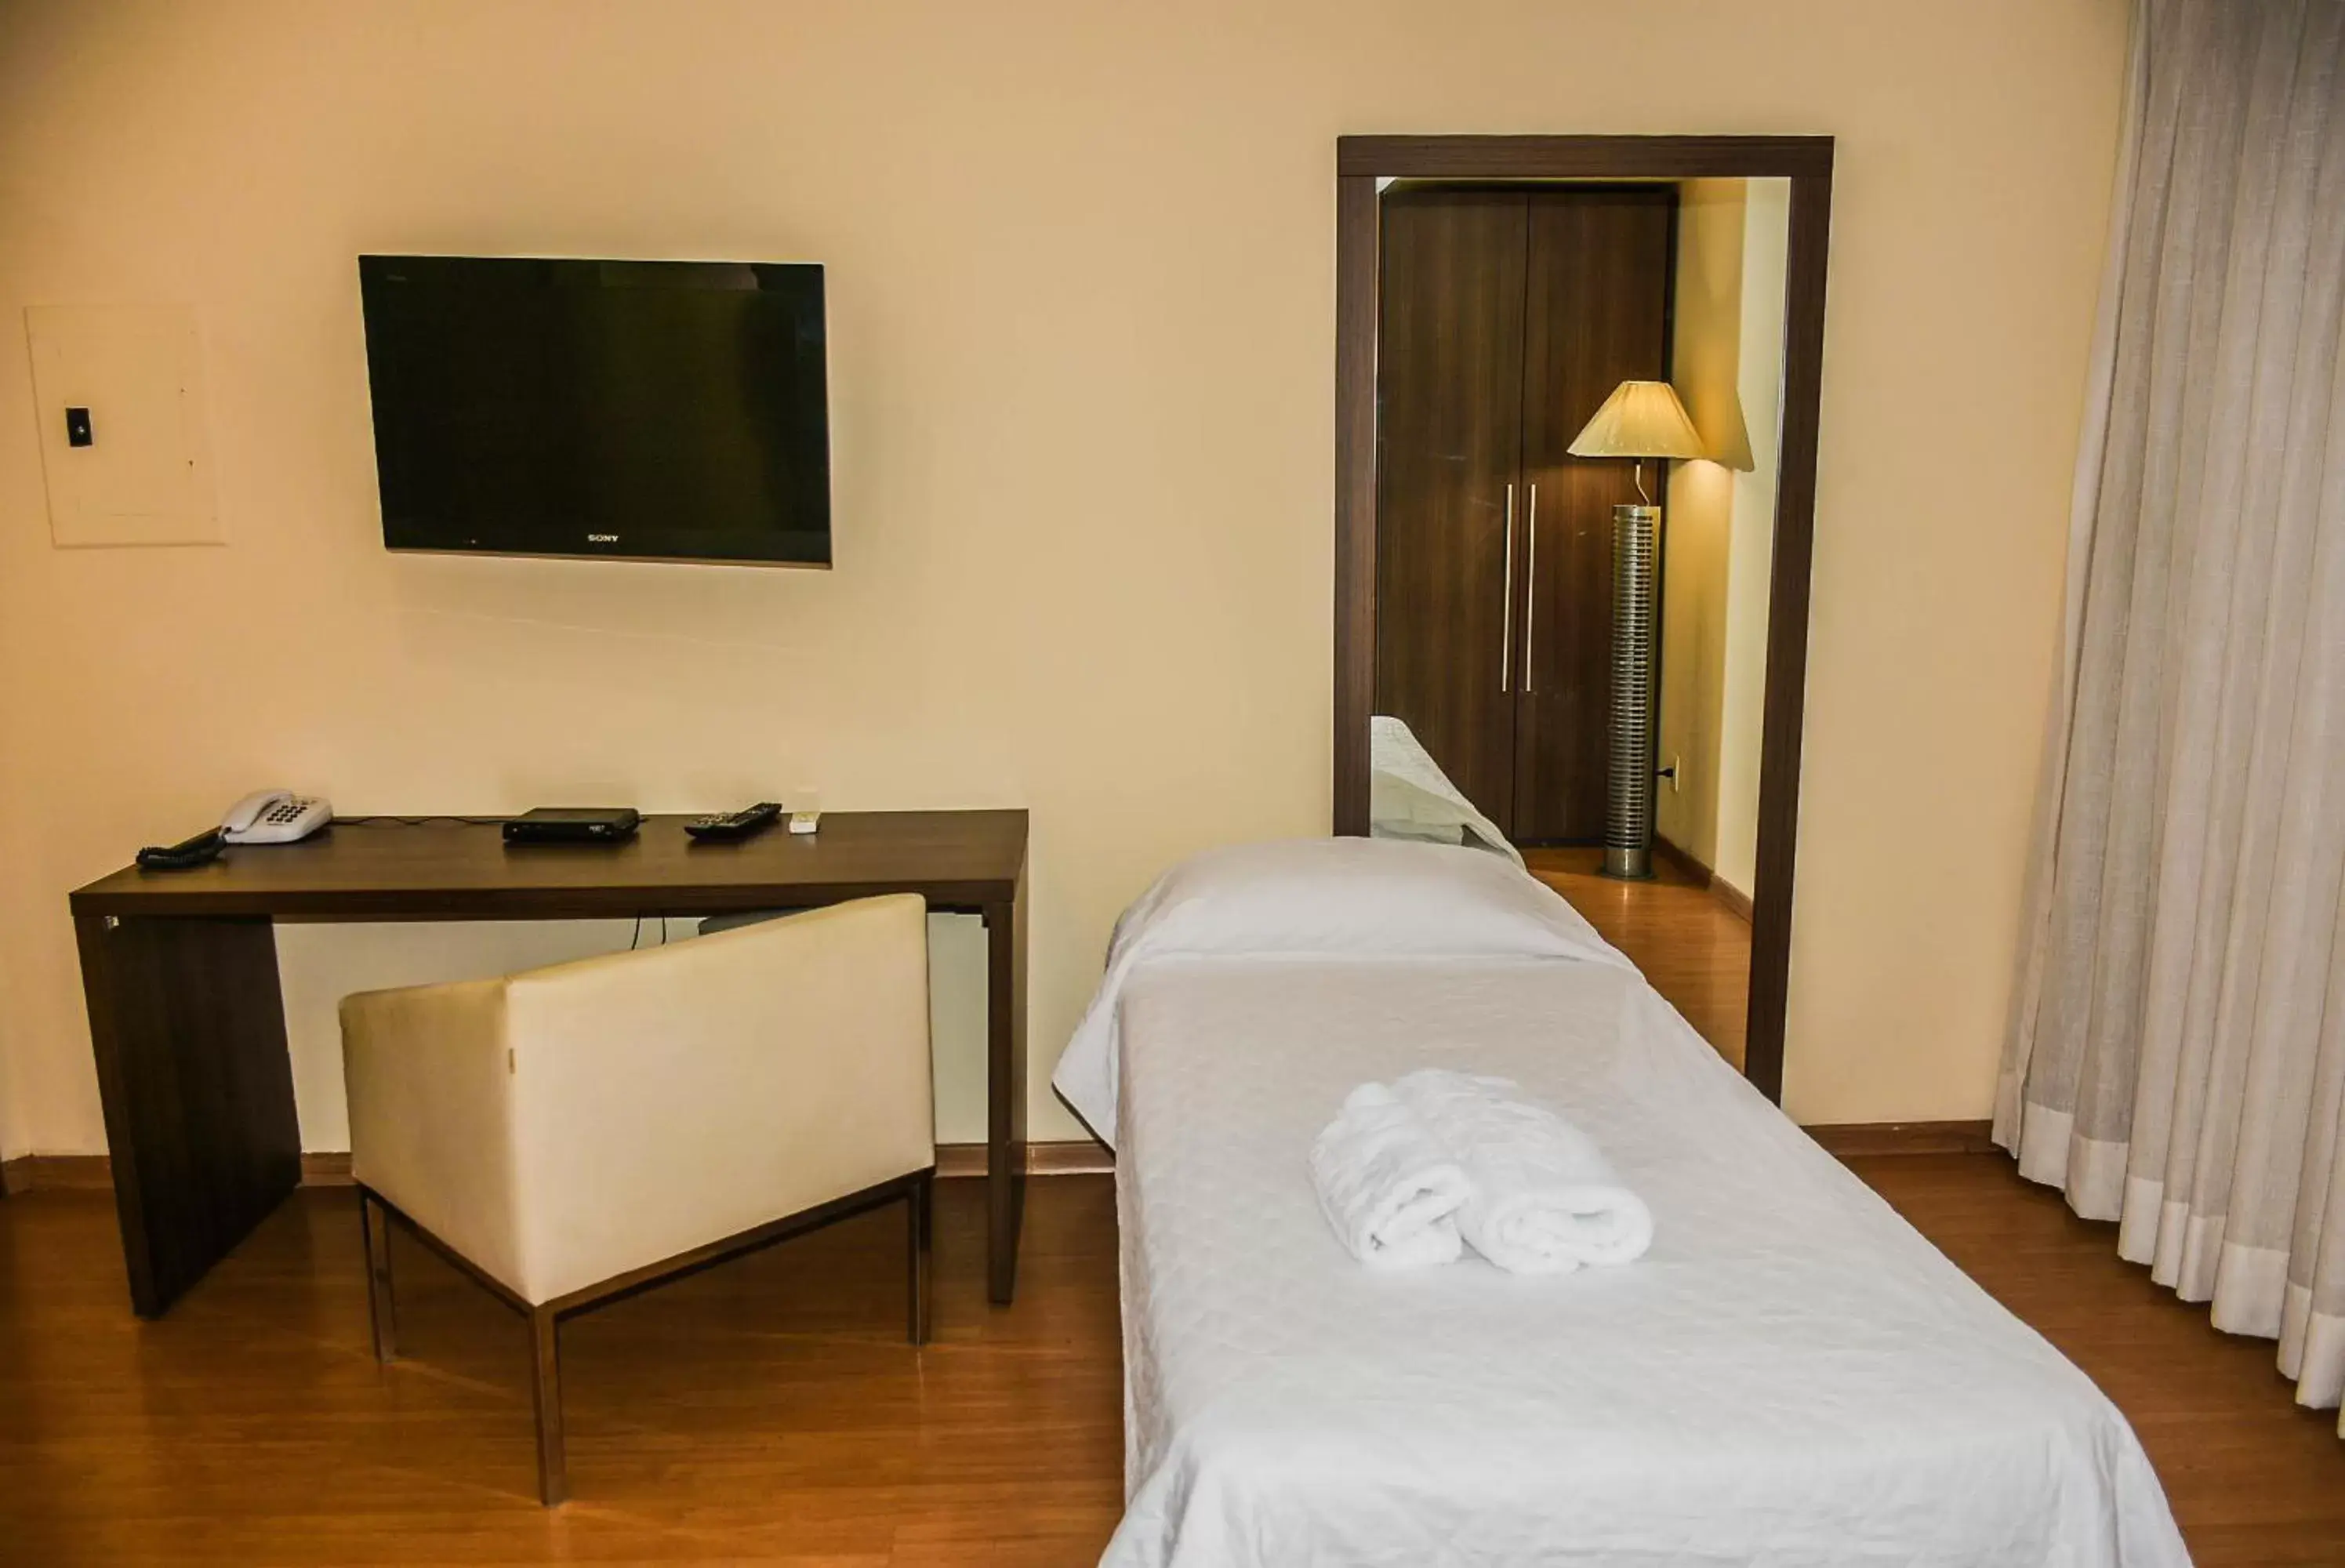 Bedroom, TV/Entertainment Center in Mont Blanc Apart Hotel Nova Iguaçu